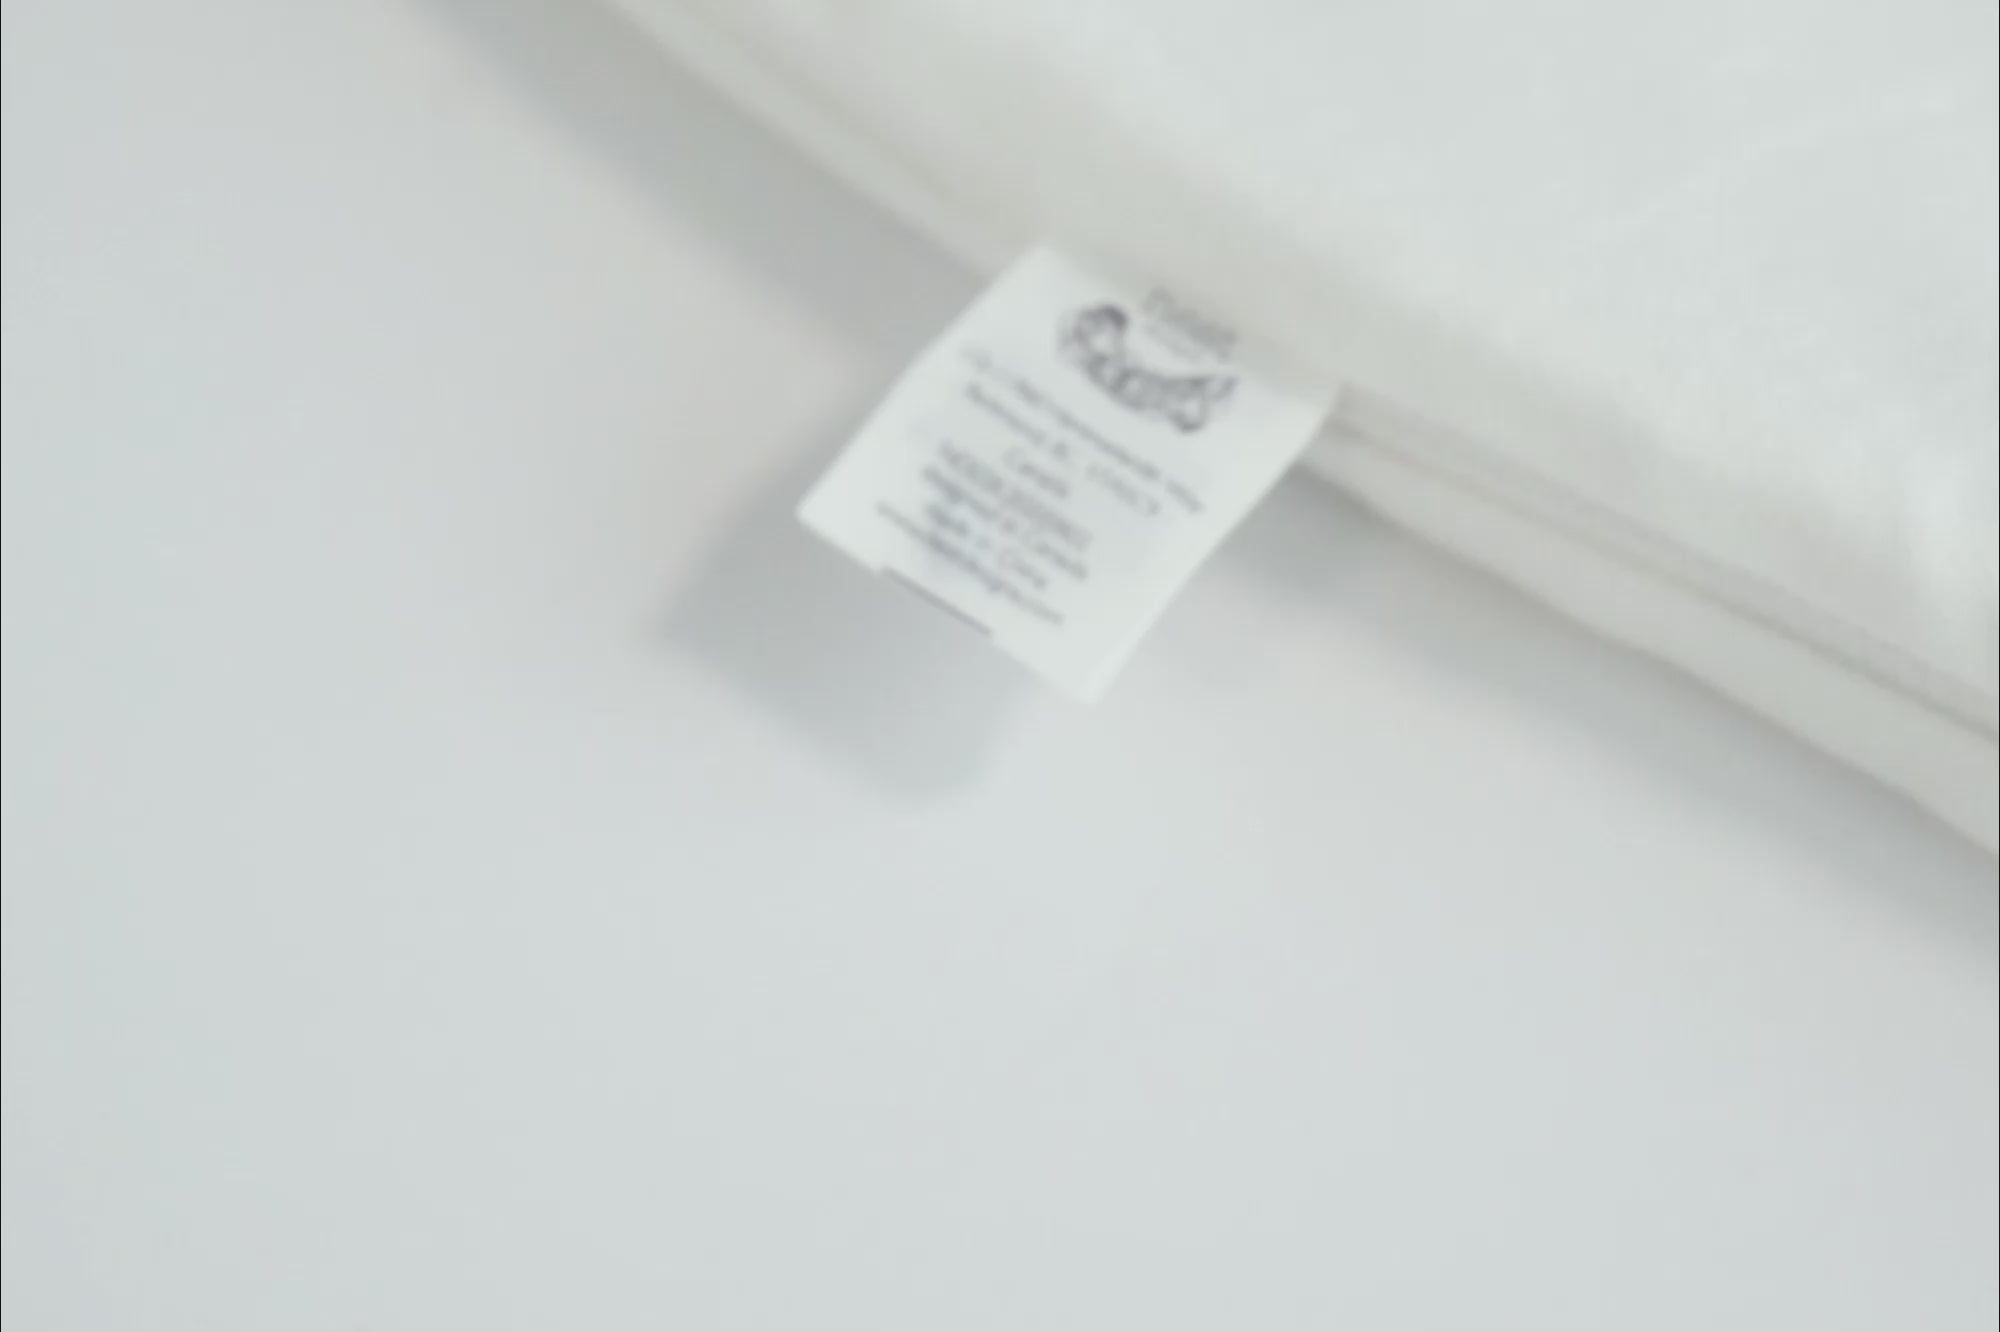 Removable Sleeve Sleep Bag 1.0 TOG (Organic Cotton) - Let's Roll!